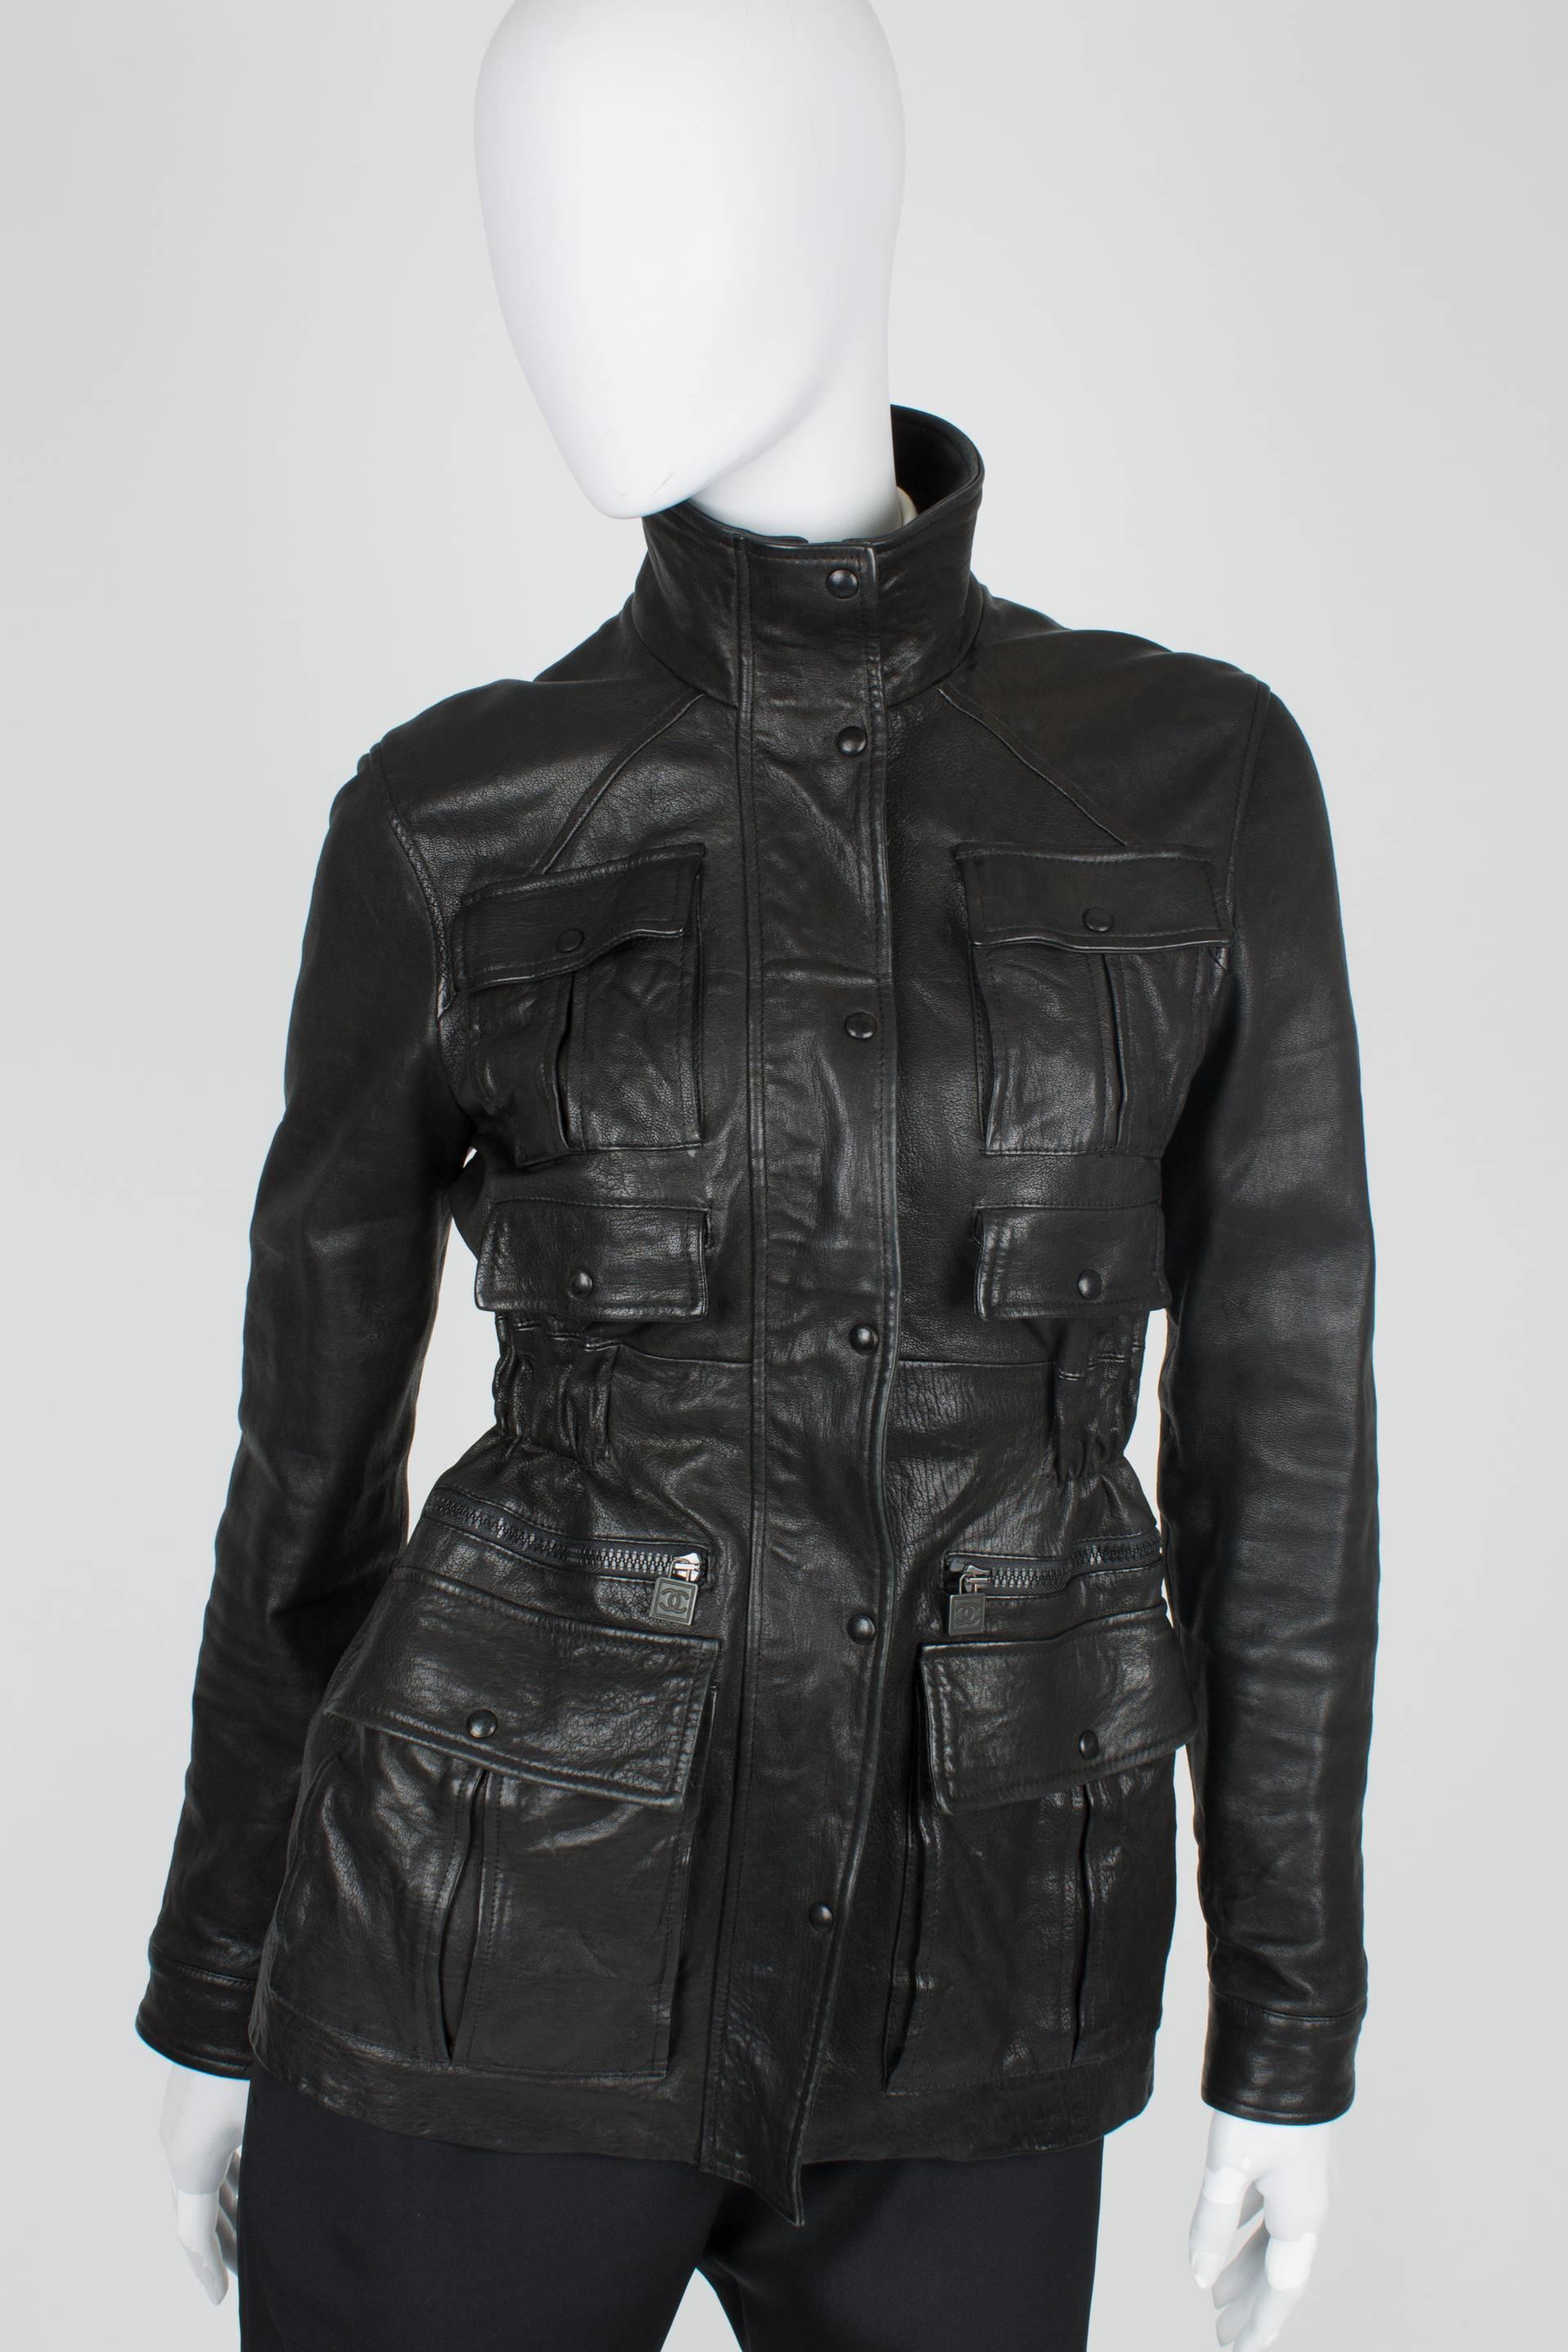 Chanel Leather Jacket - black  4